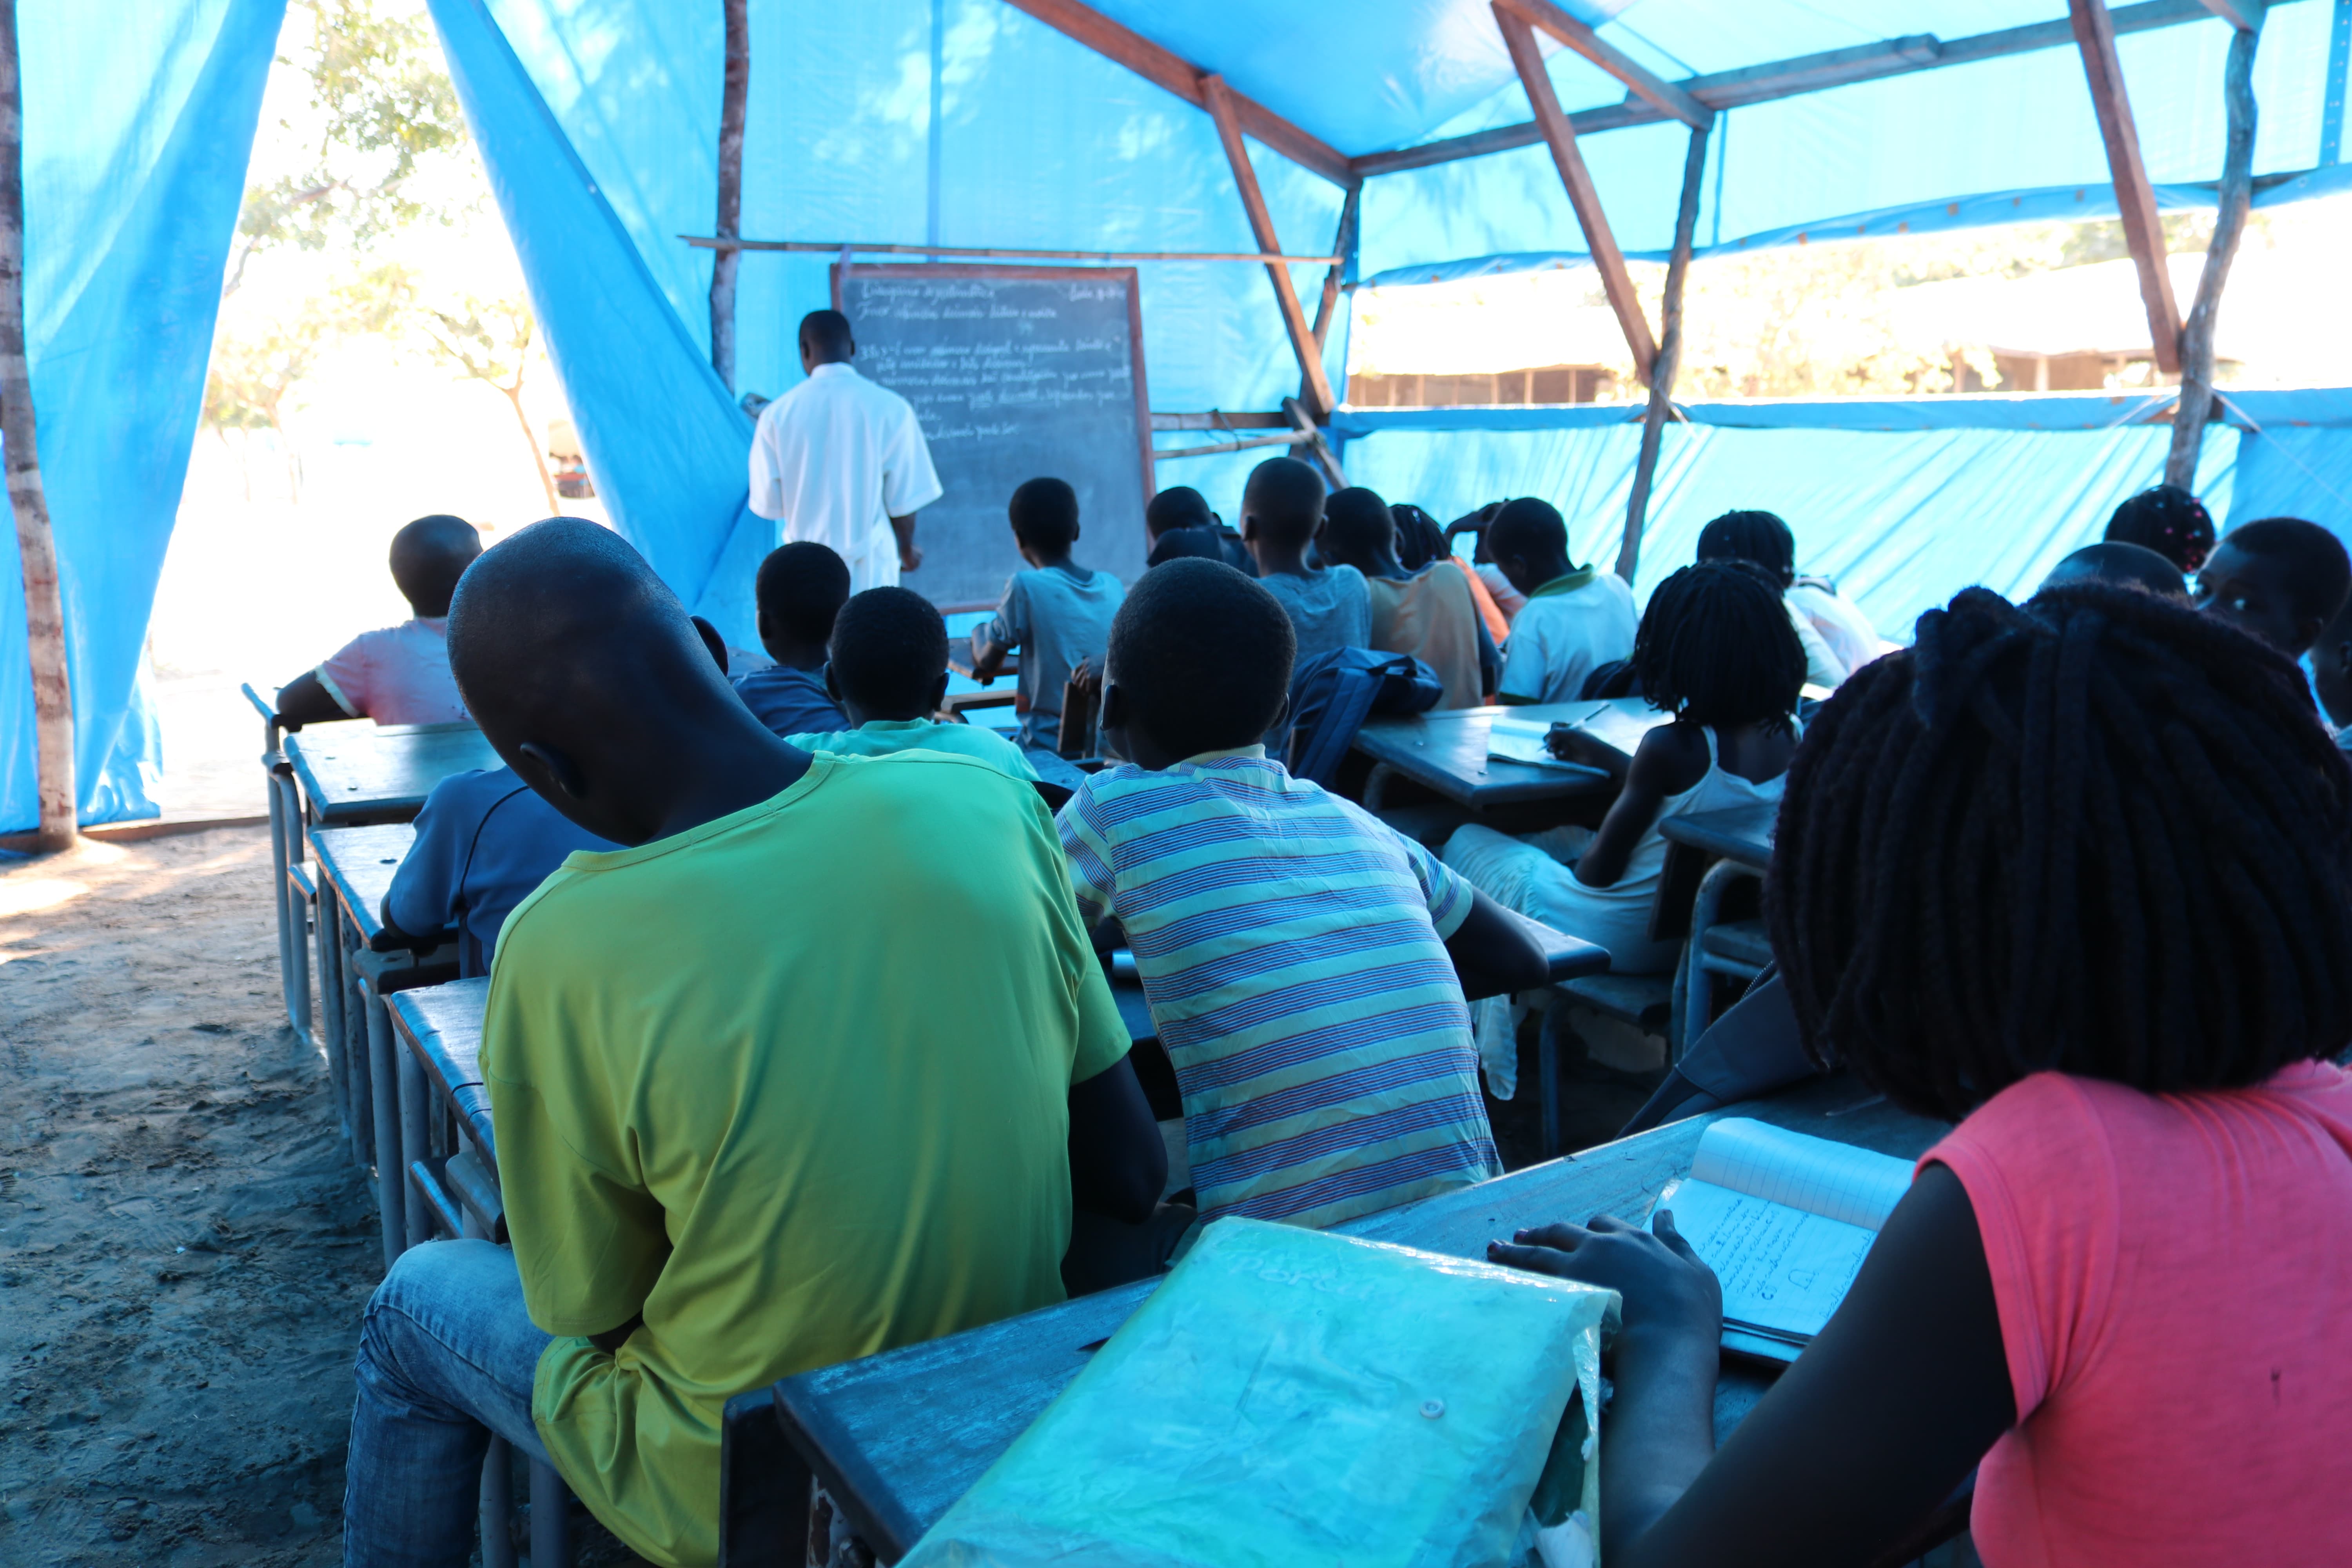 pupils attending a lesson